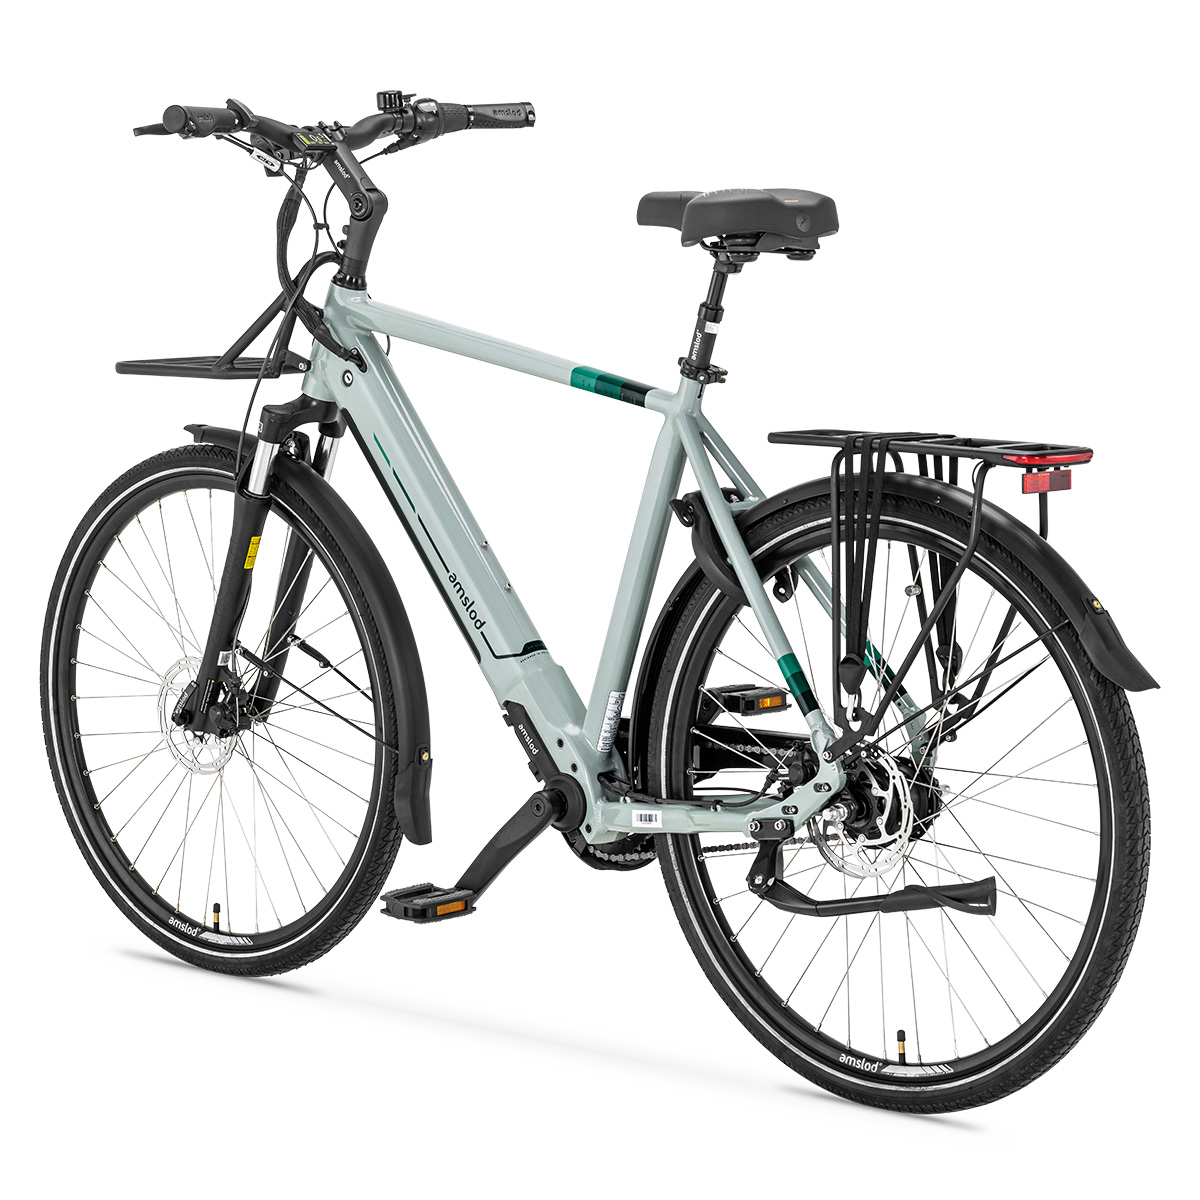 Amslod-elektrische-fiets-denton-stadsfiets-elektrisch-verende-voorvork5